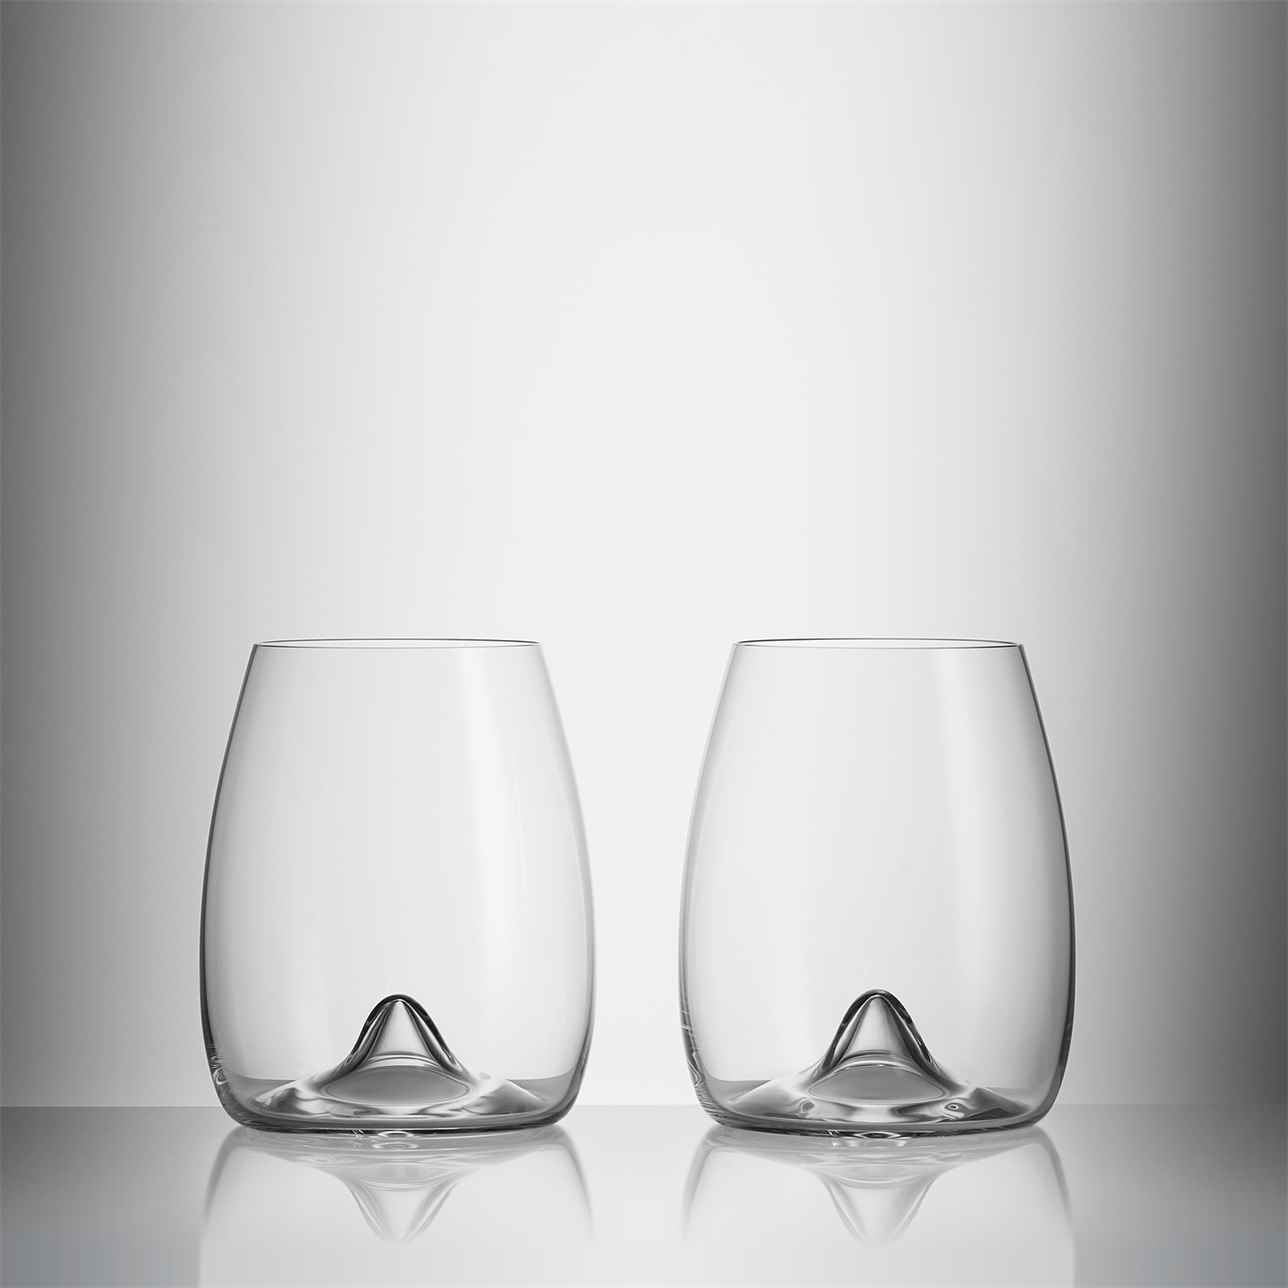  Elegance Stemless Wine Glass, Set of 2 